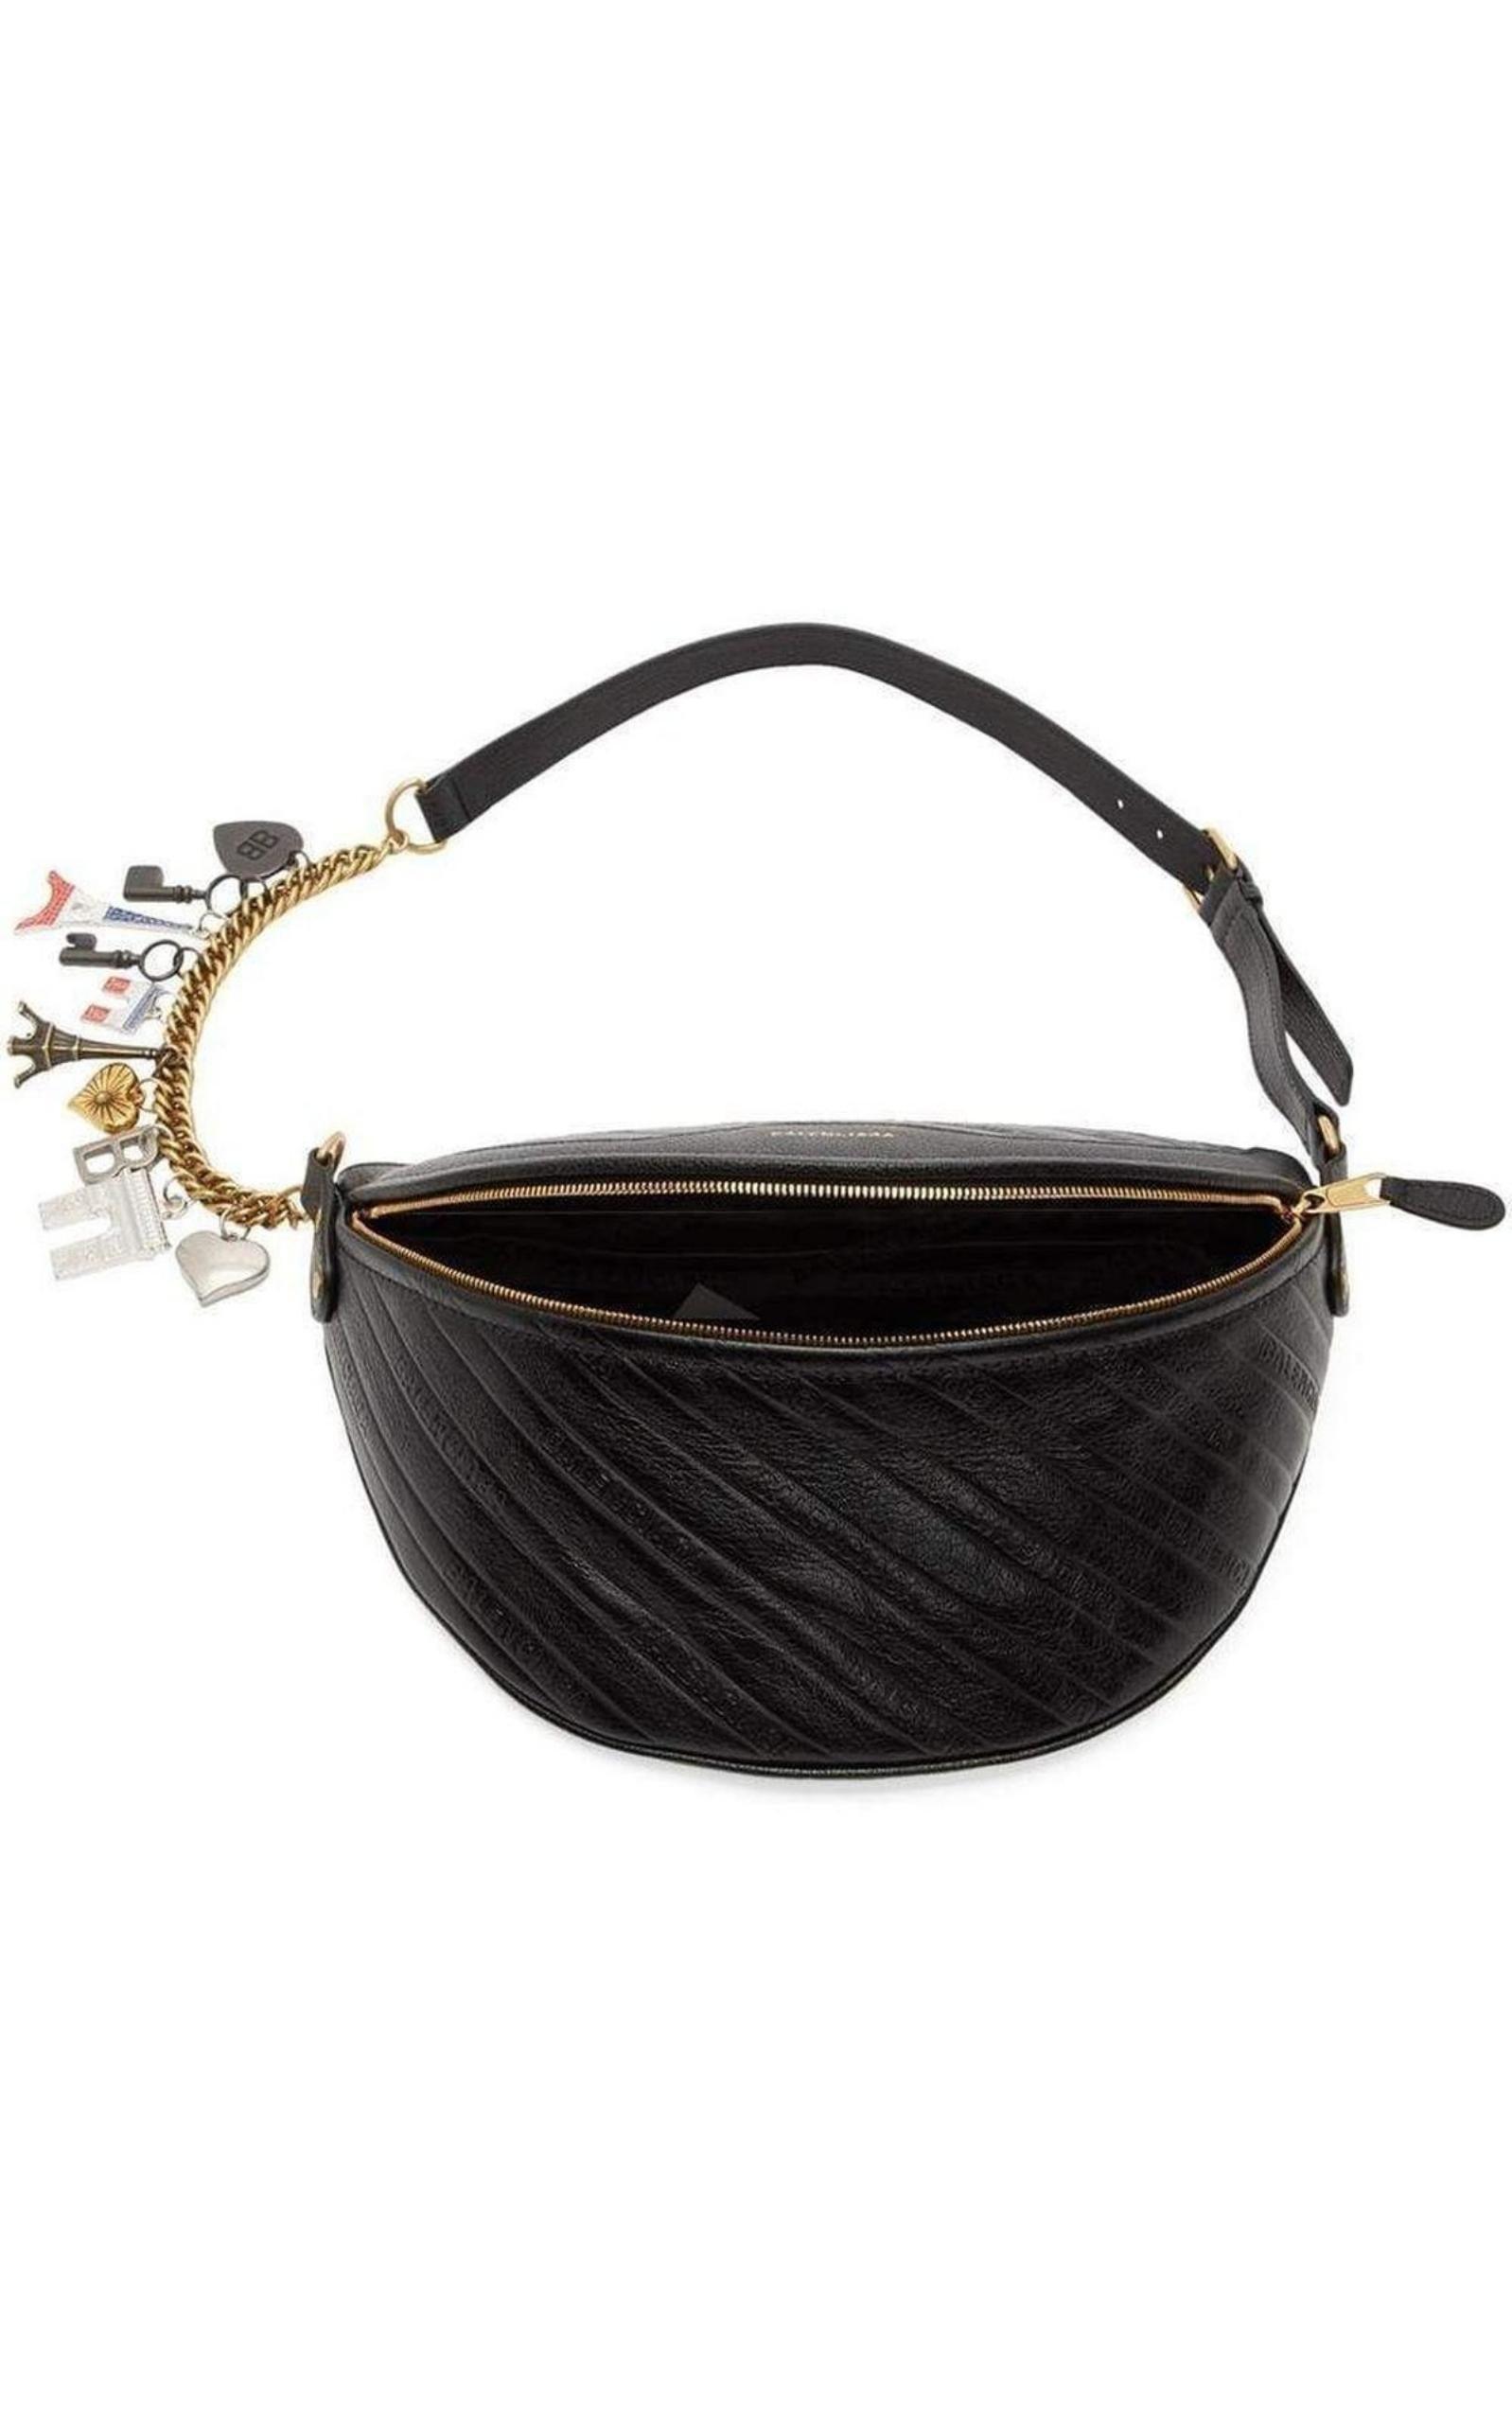 Balenciaga Black Leather Souvenir Belt Bag